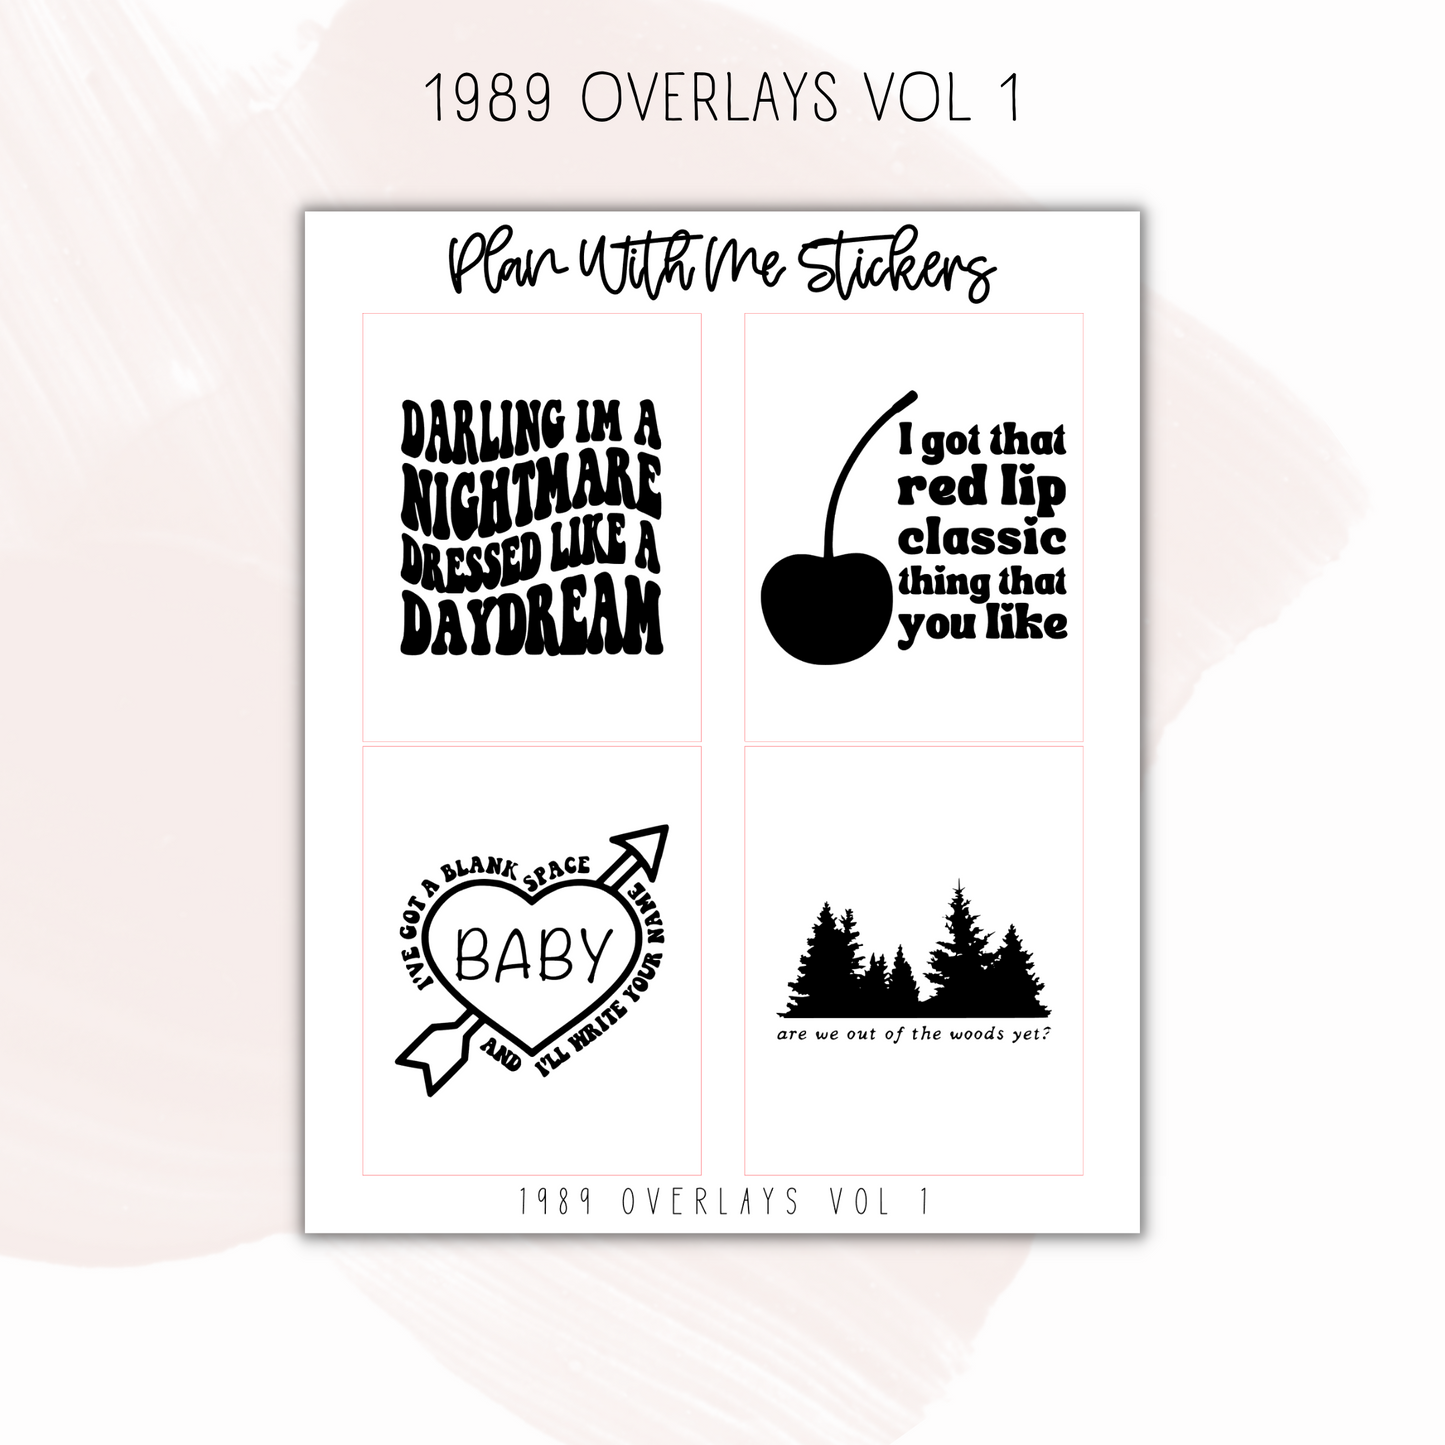 1989 Overlays Vol 1